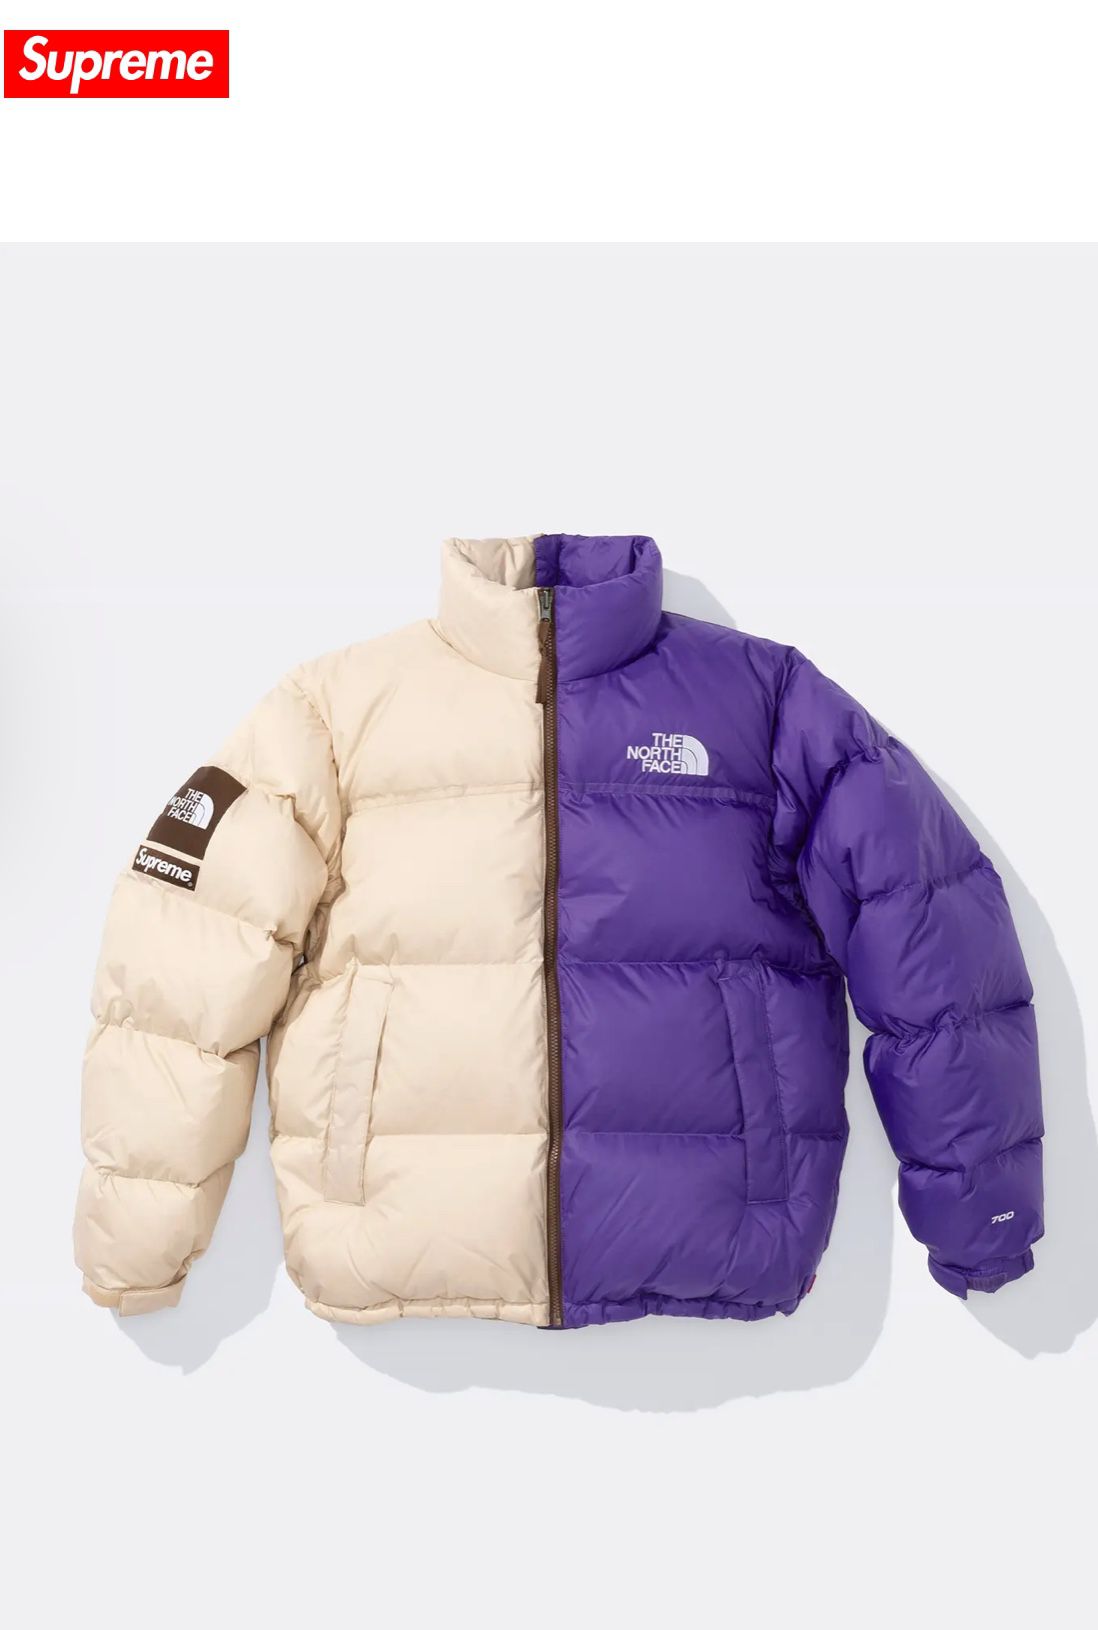 Supreme The North Face Split Jacket Purple Size XXL